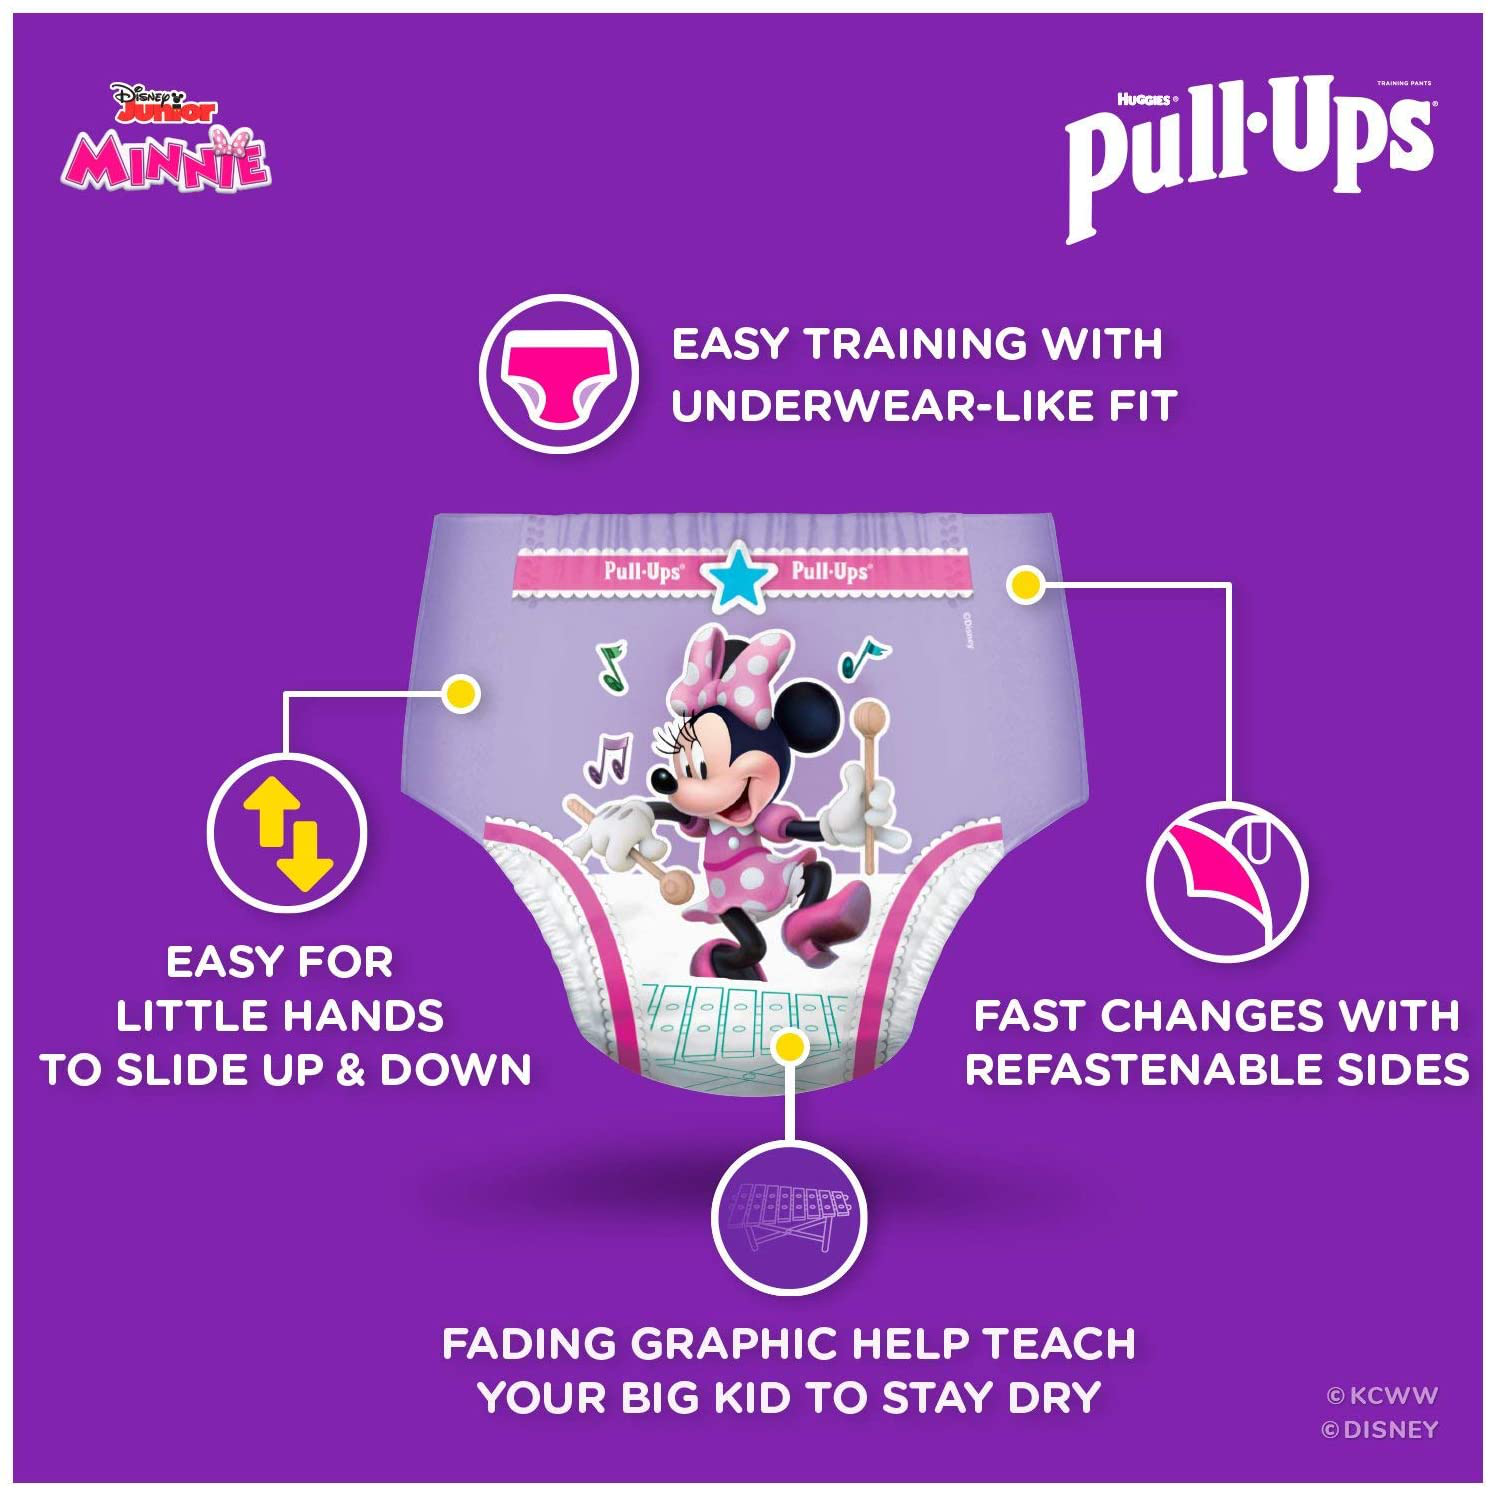 Pull-Ups Girls' Potty Training Pants Training Underwear